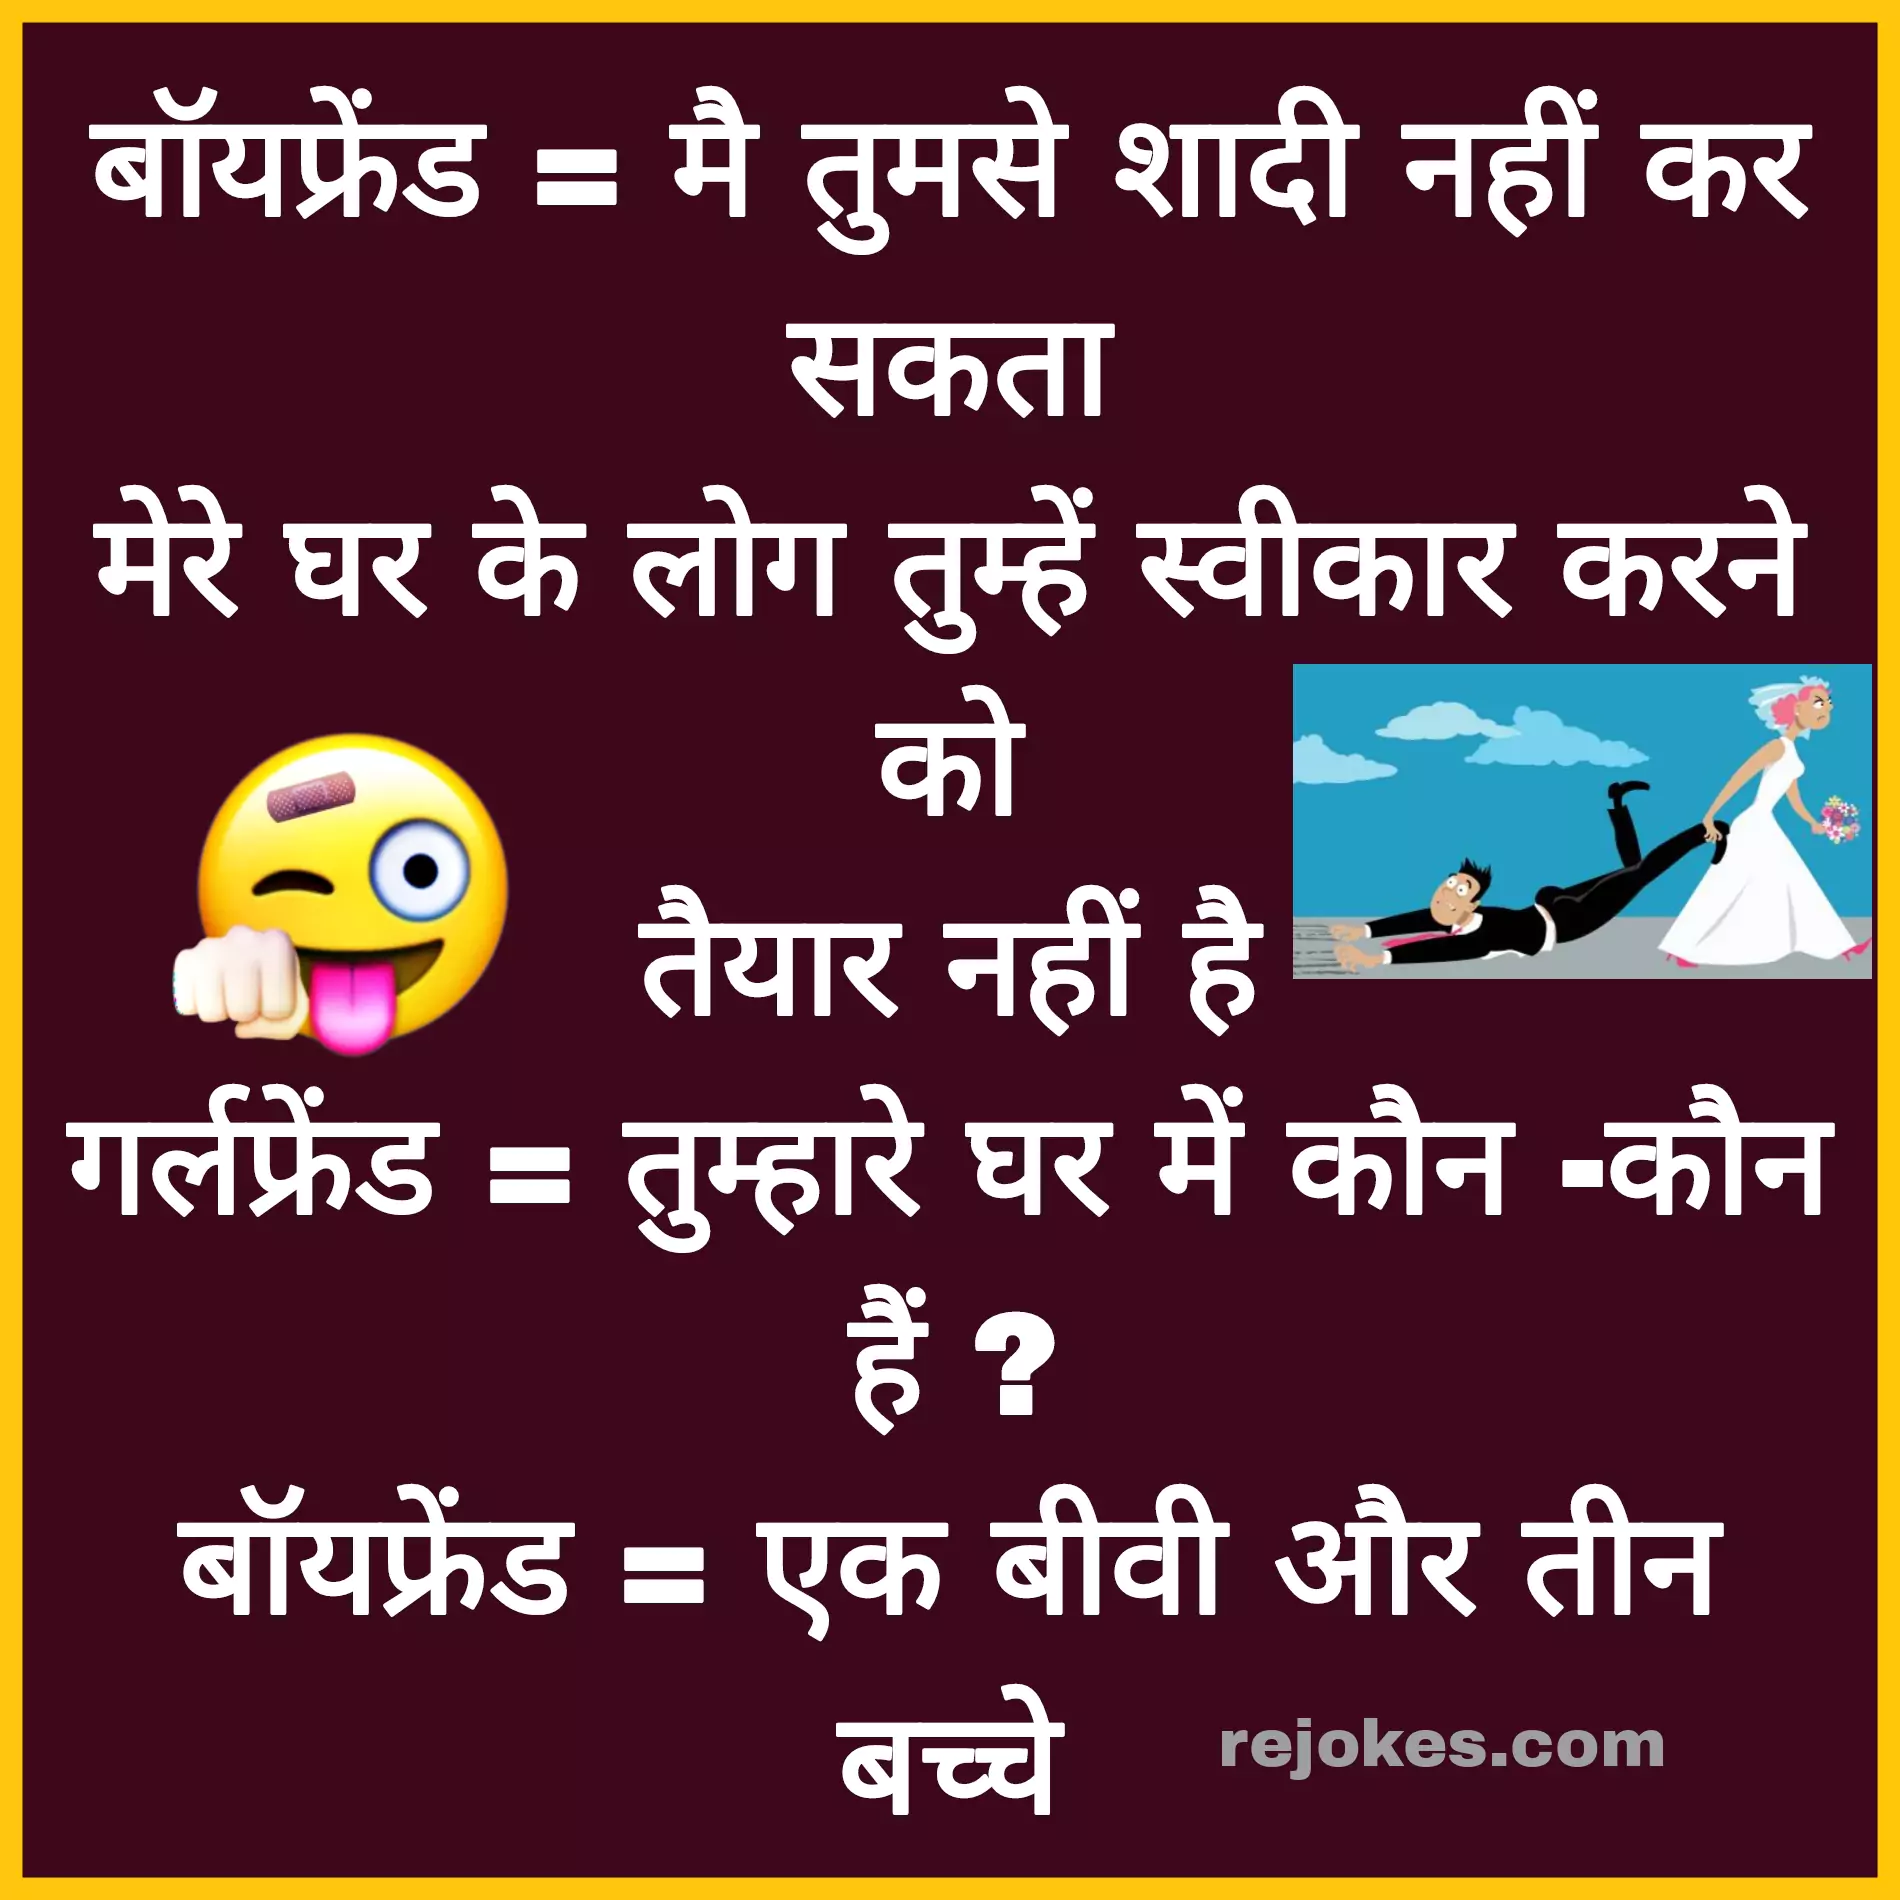 love jokes in hindi images download